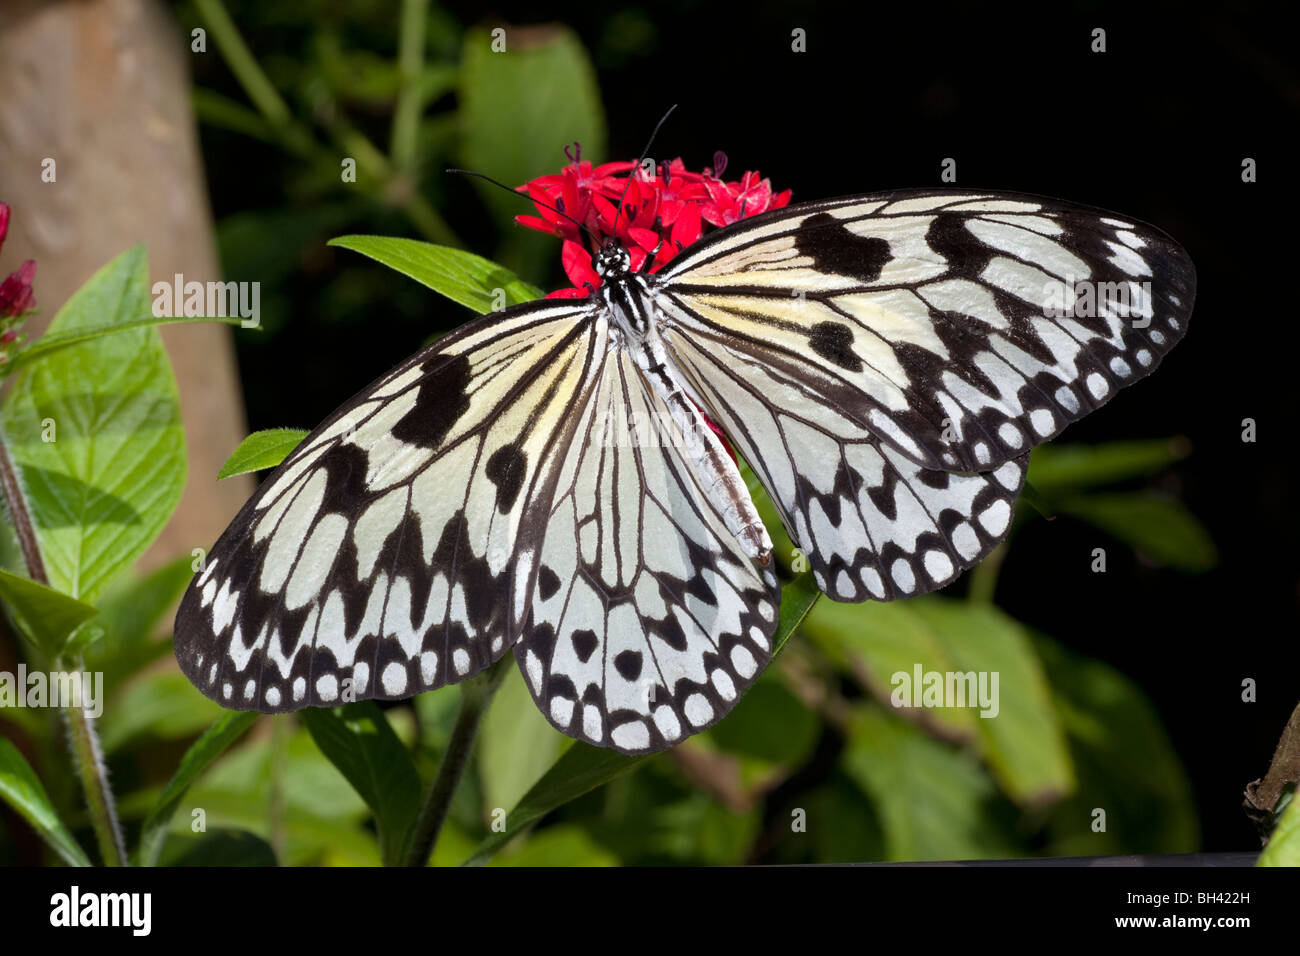 Baum-Nymphe (Idee Leuconoe) Schmetterling, Reispapier Schmetterling, Papier Drachen Schmetterling Stockfoto